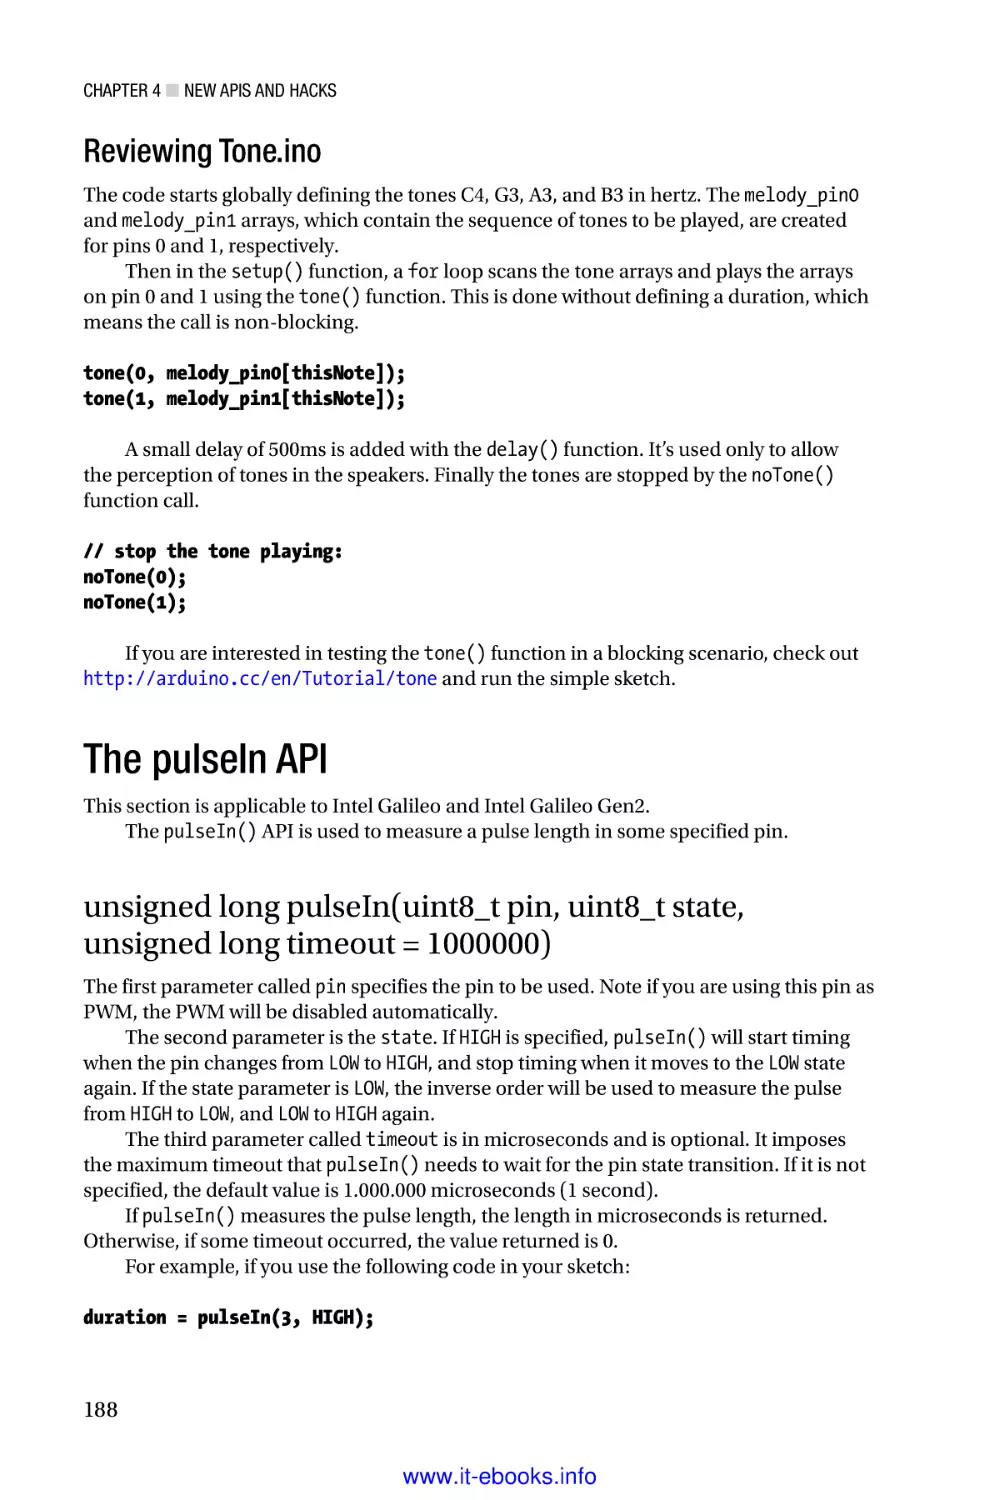 Reviewing Tone.ino
The pulseIn API
unsigned long pulseIn(uint8_t pin, uint8_t state, unsigned long timeout = 1000000)